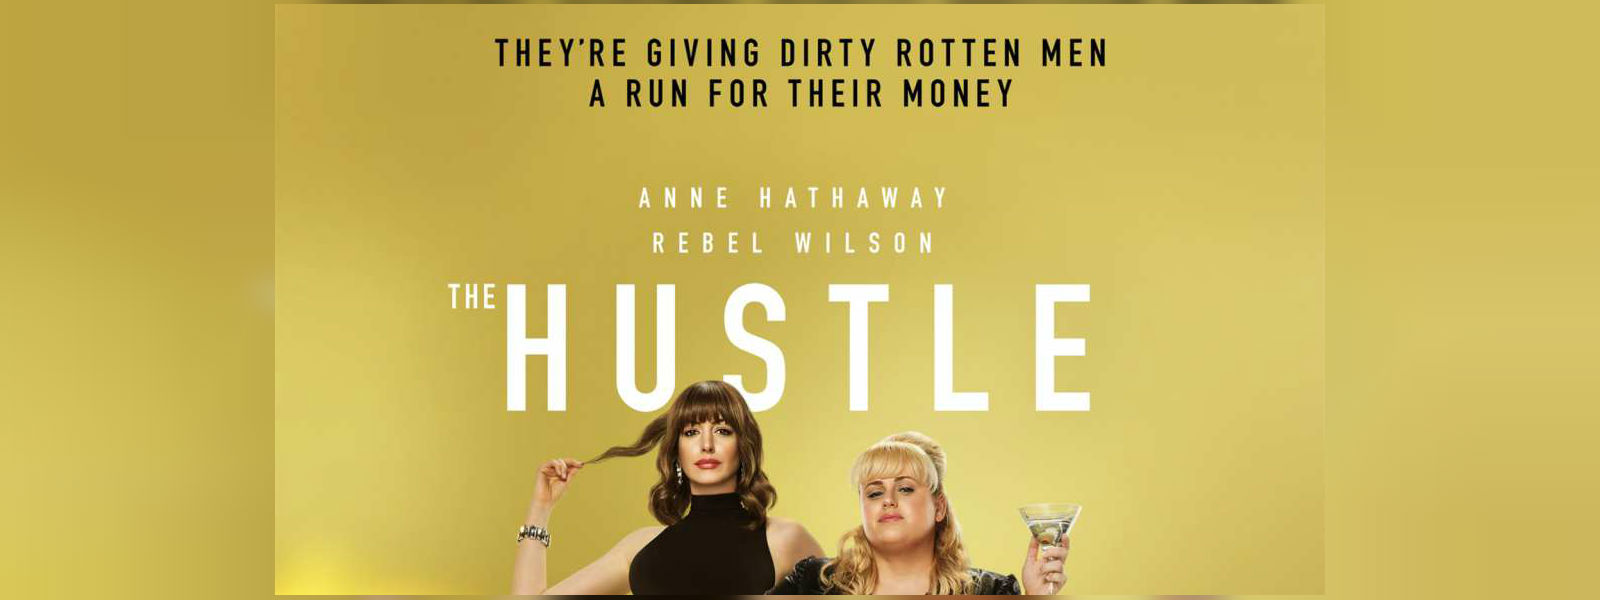 “The Hustle” hits cinemas on May 10th